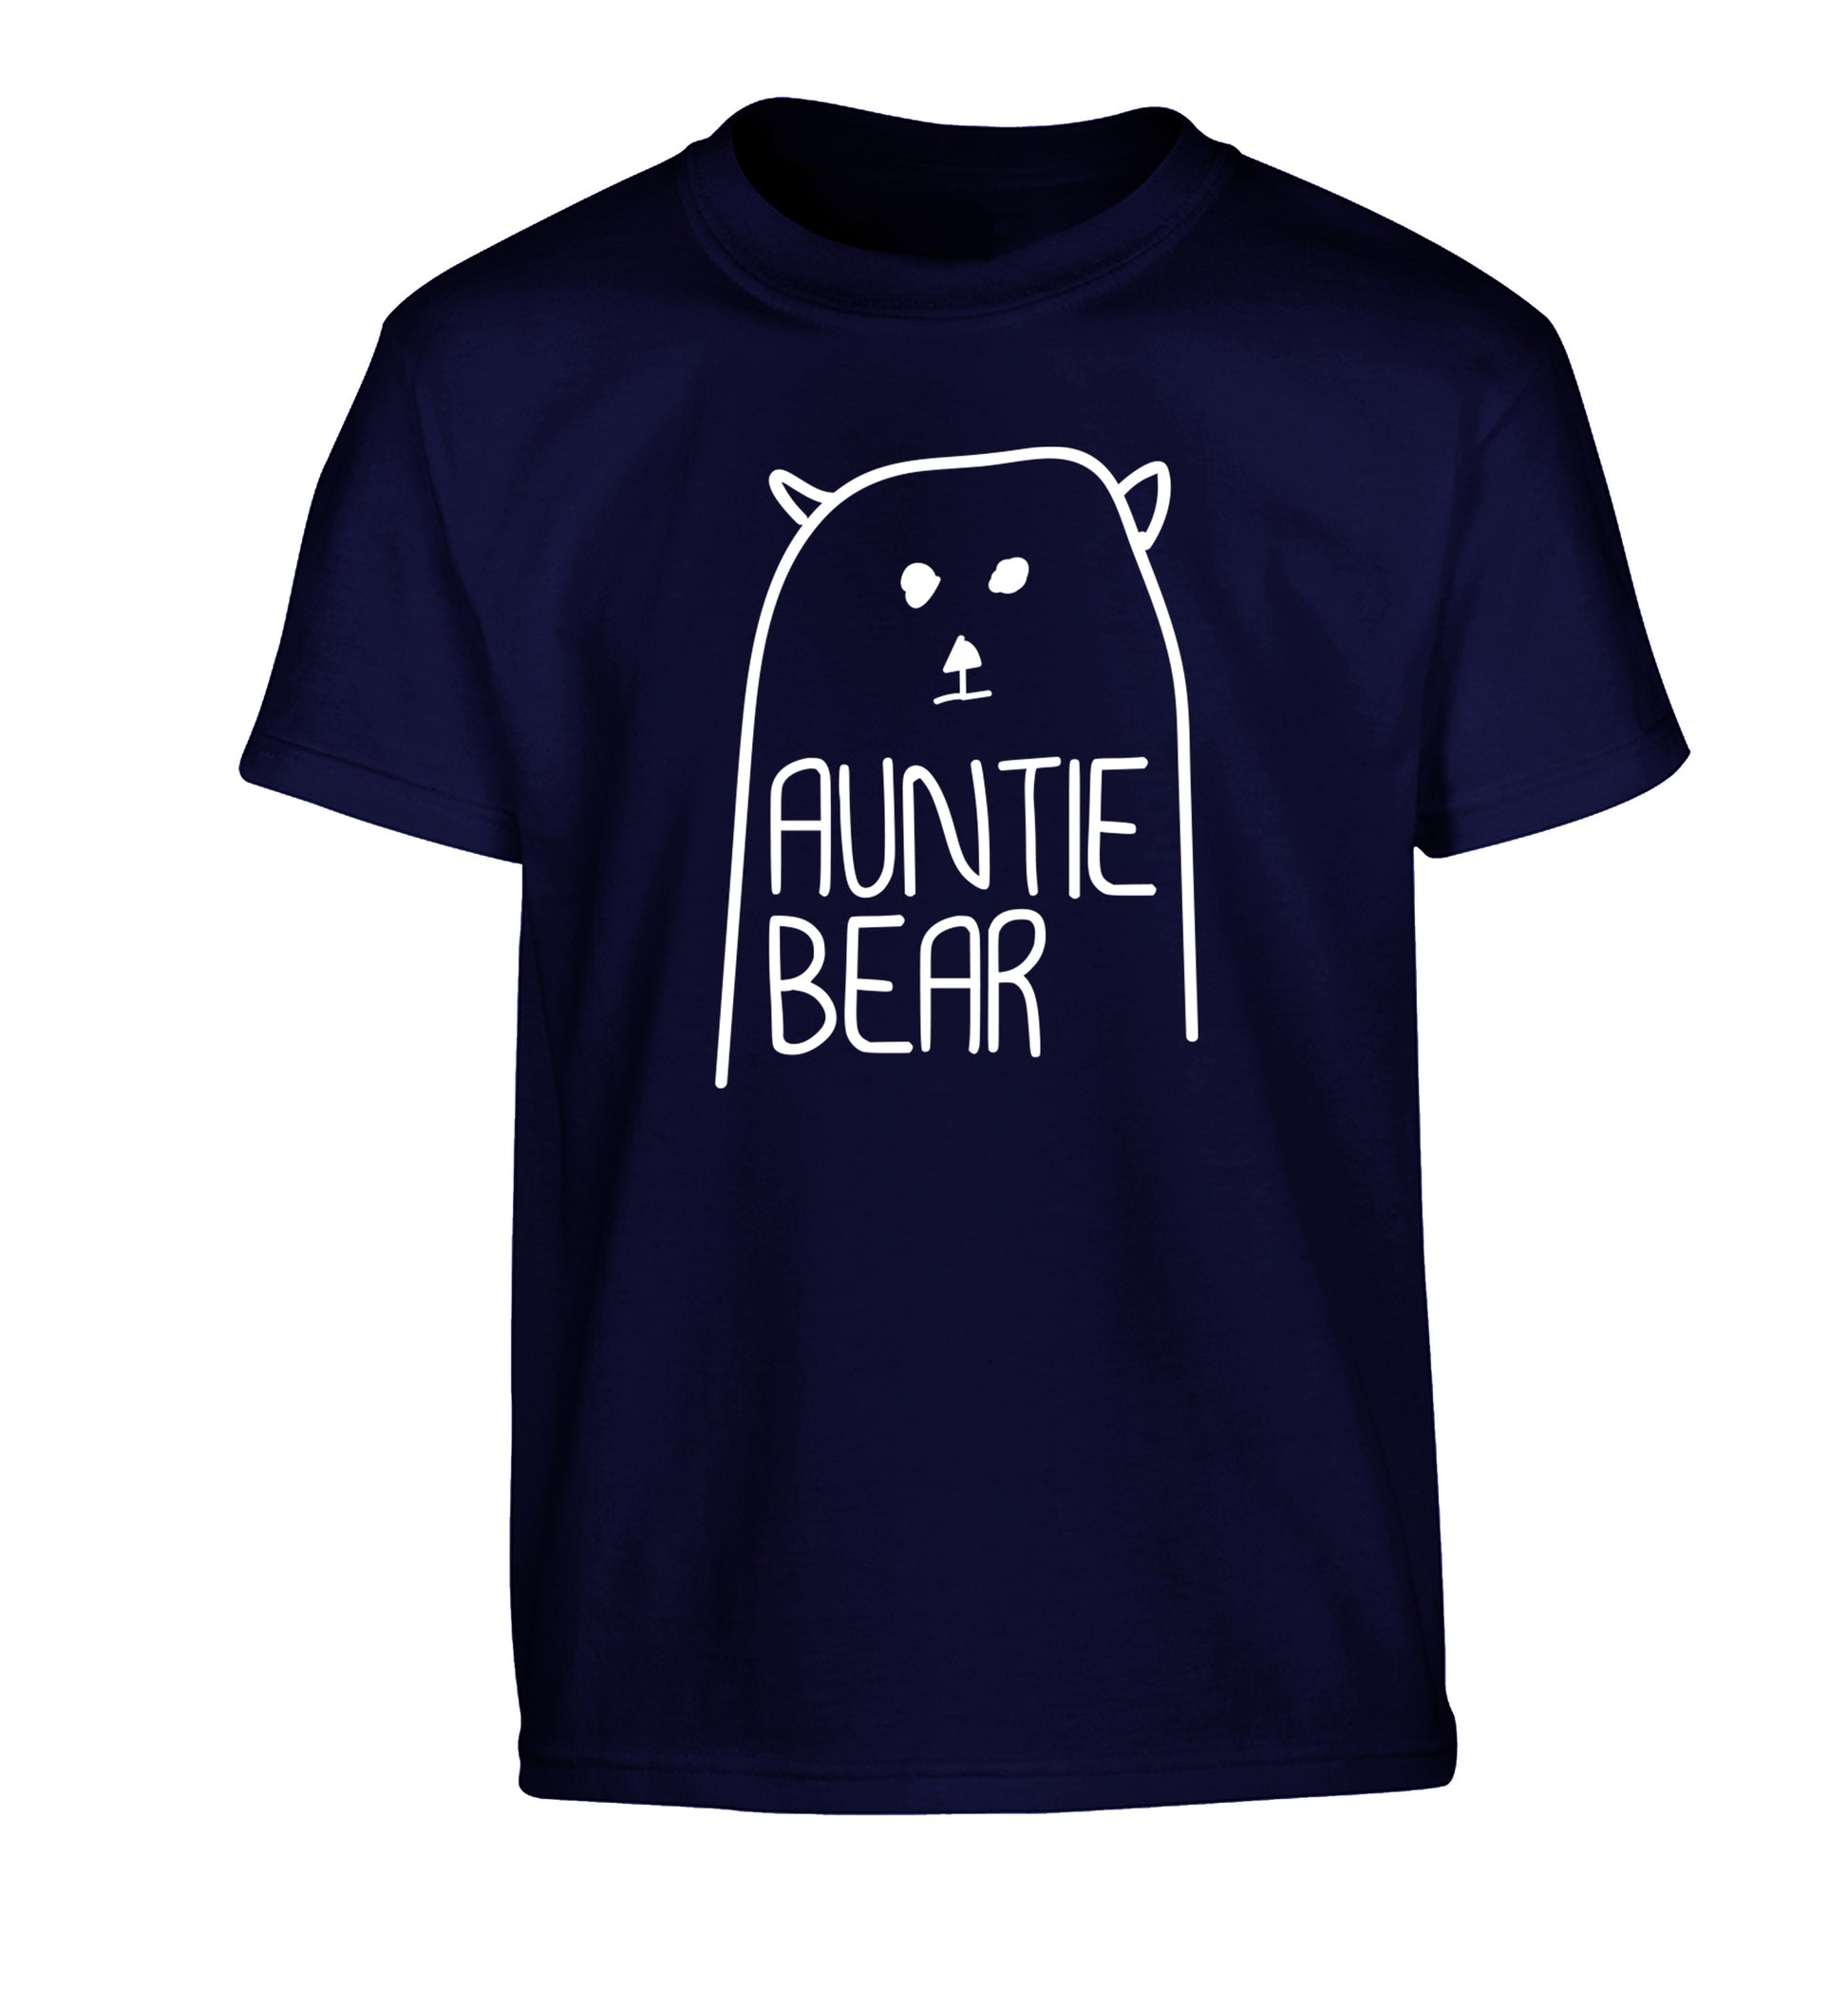 Auntie bear Children's navy Tshirt 12-13 Years